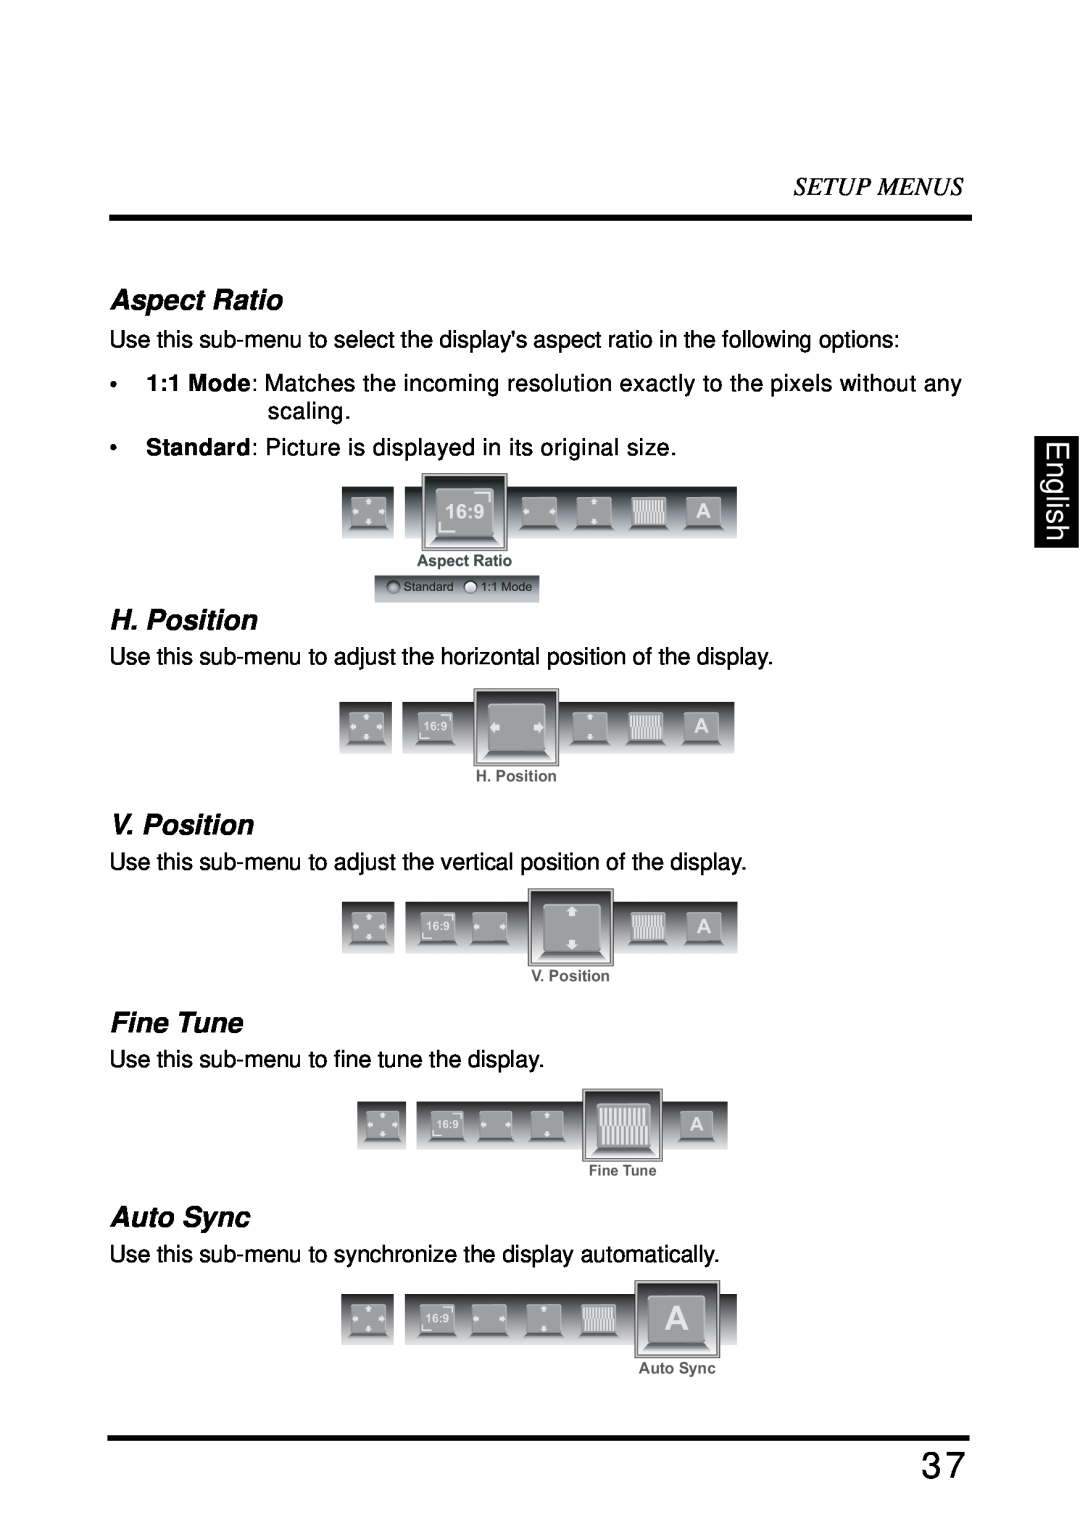 Westinghouse LD-4680 user manual Aspect Ratio, H. Position, V. Position, Fine Tune, Auto Sync, English, Setup Menus 